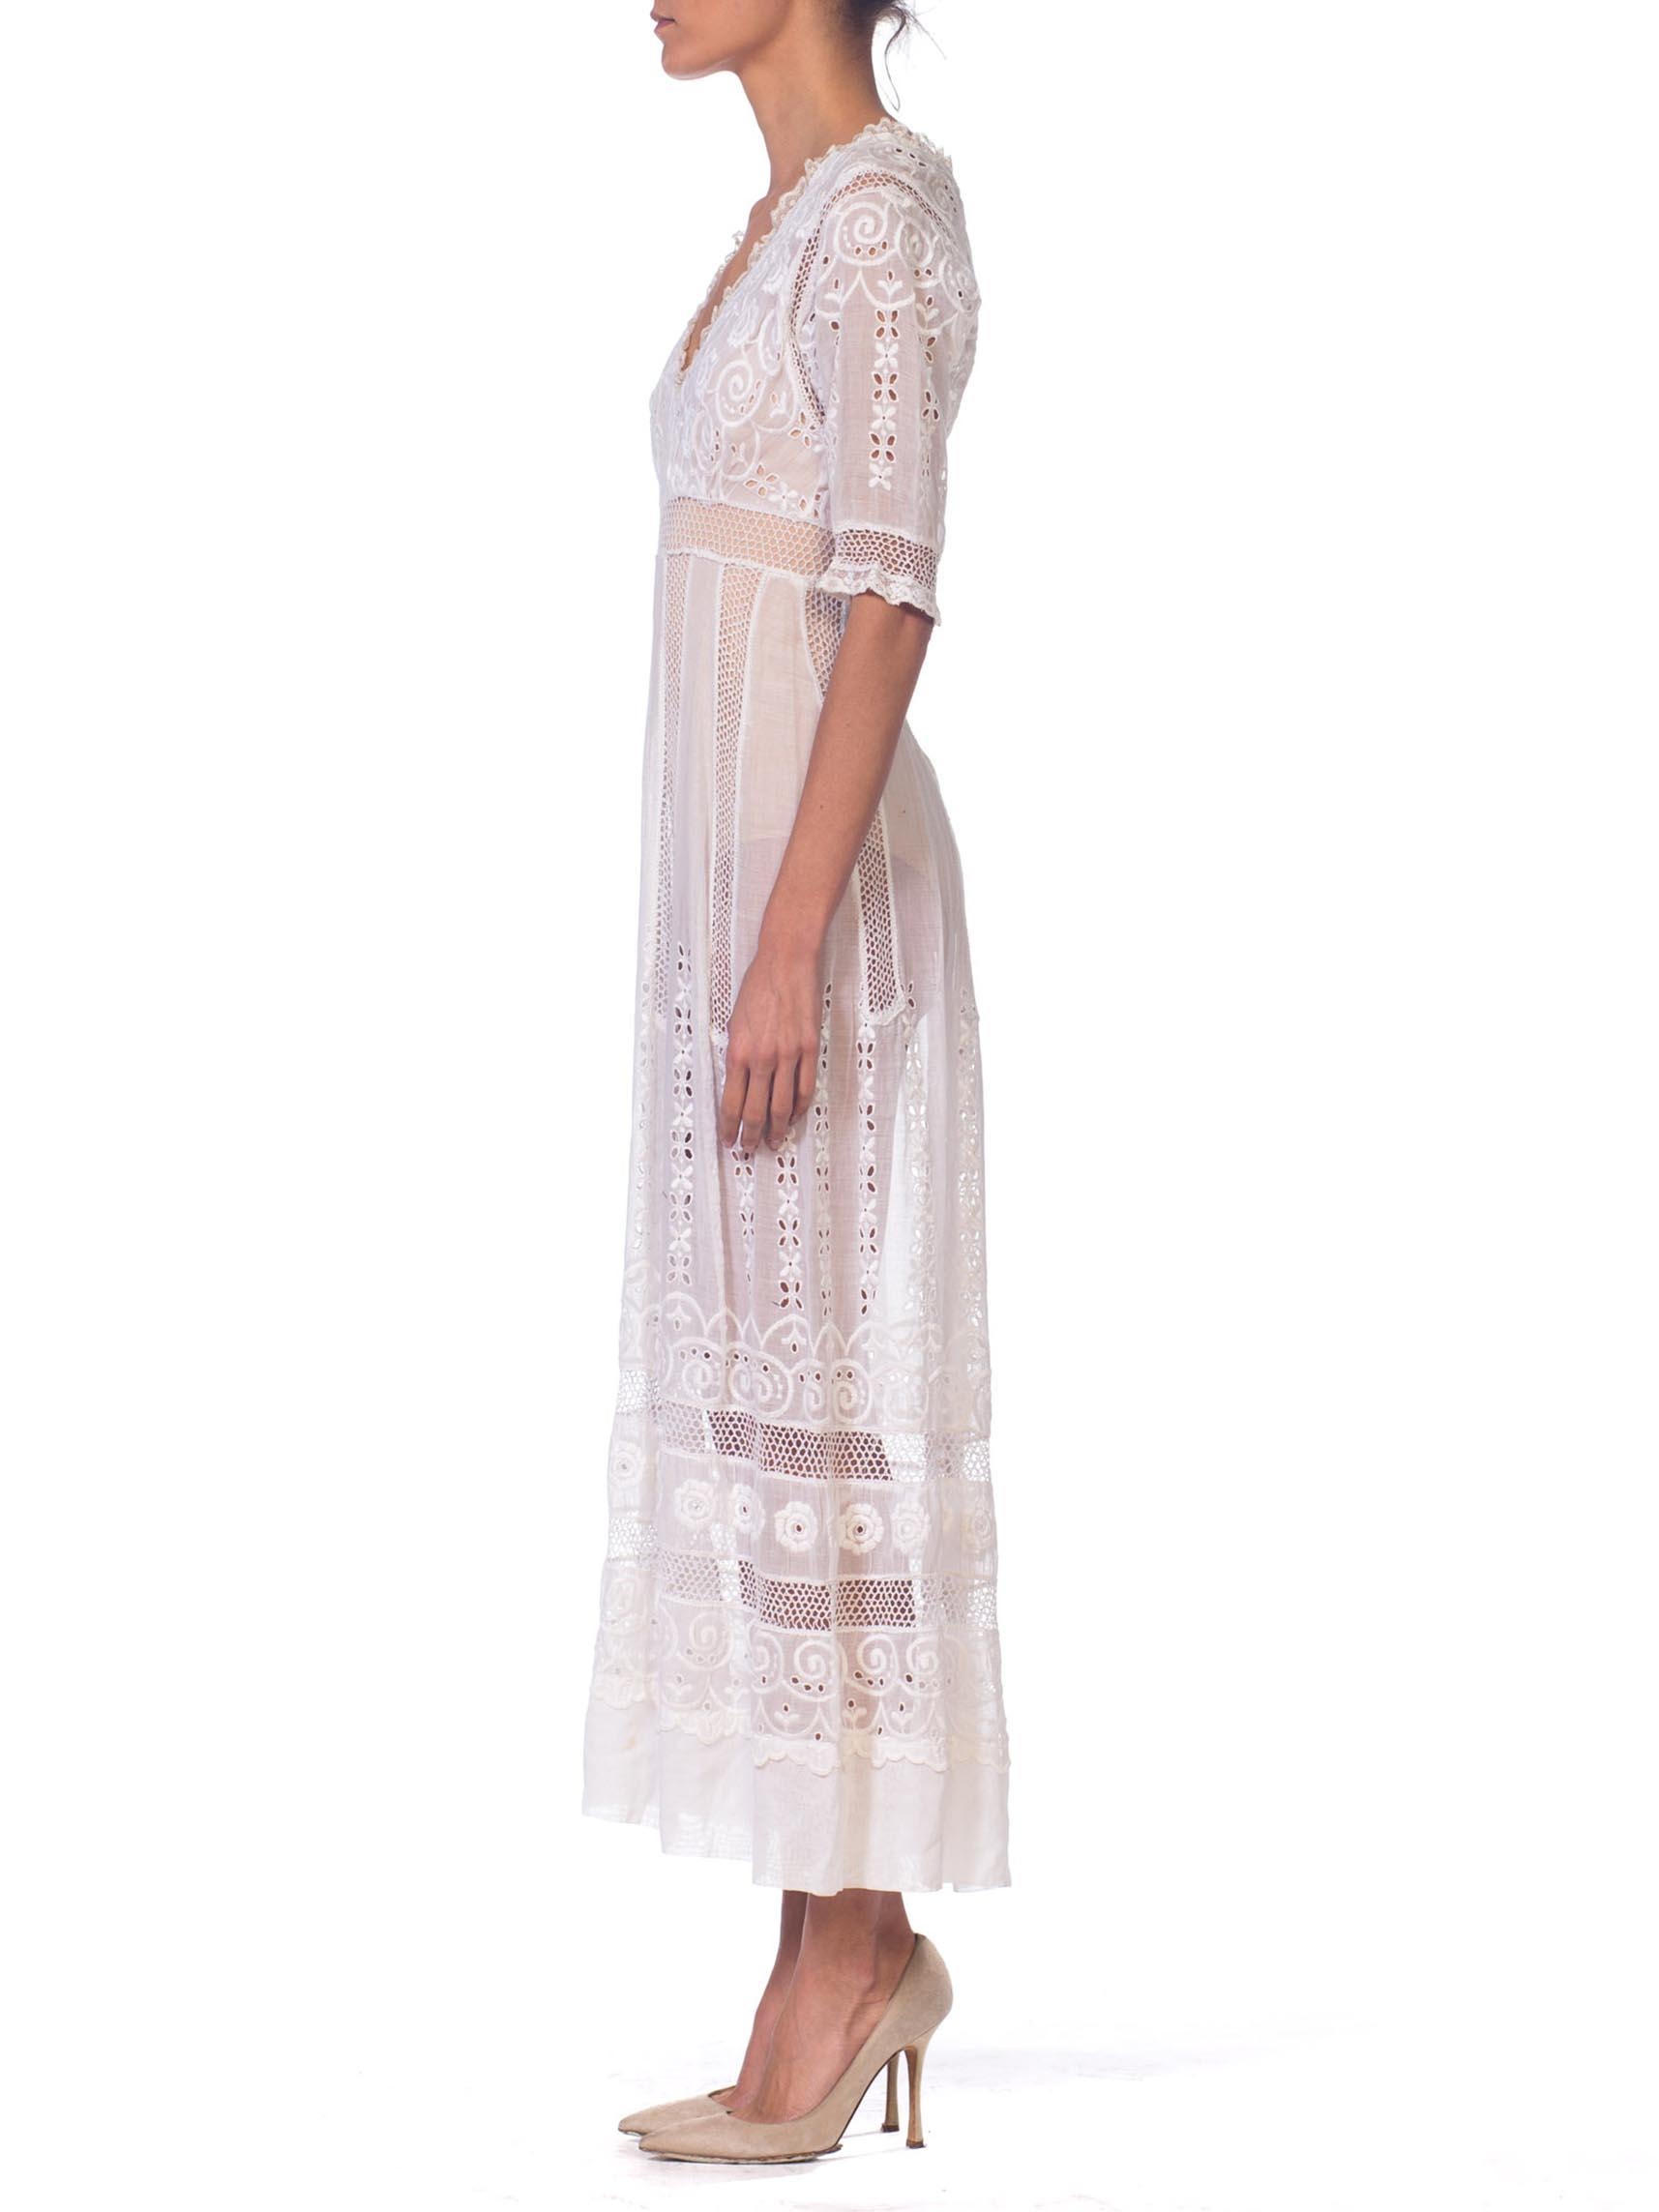 Gray Edwardian Embroidered Organic White Cotton & Lace Tea Dress